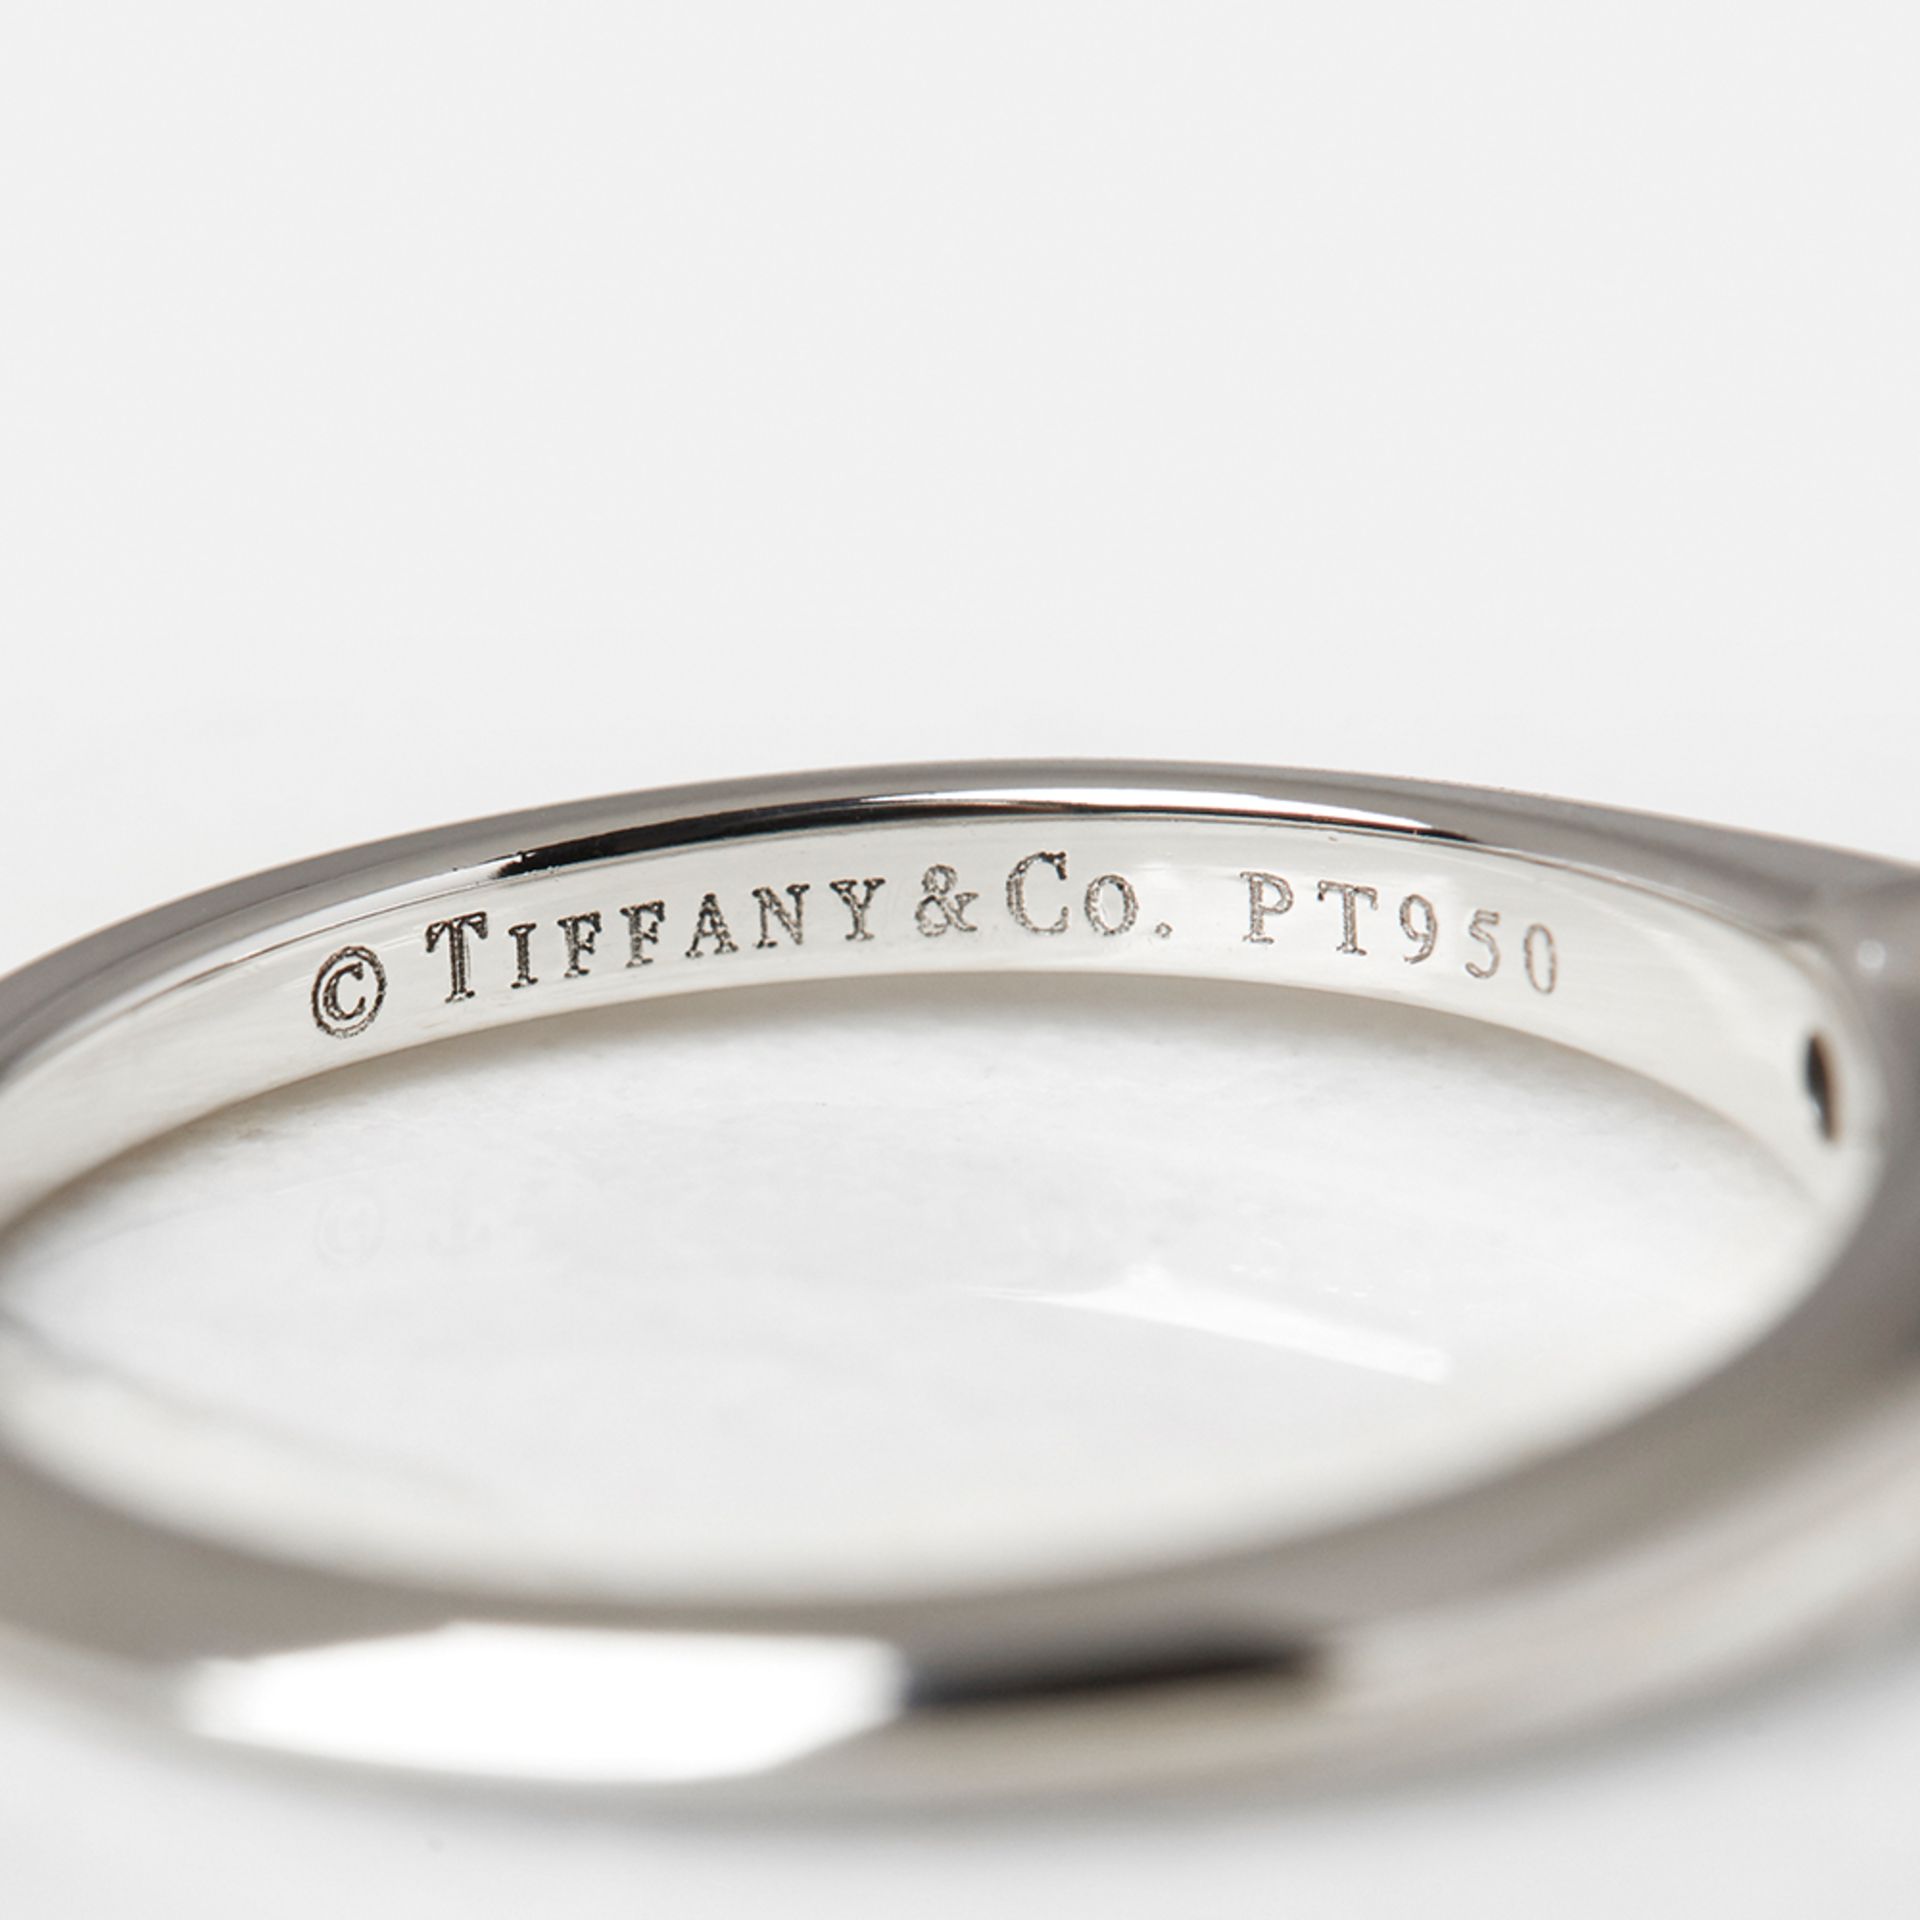 Tiffany & Co. Platinum 0.20ct Diamond Engagement Ring - Image 7 of 7